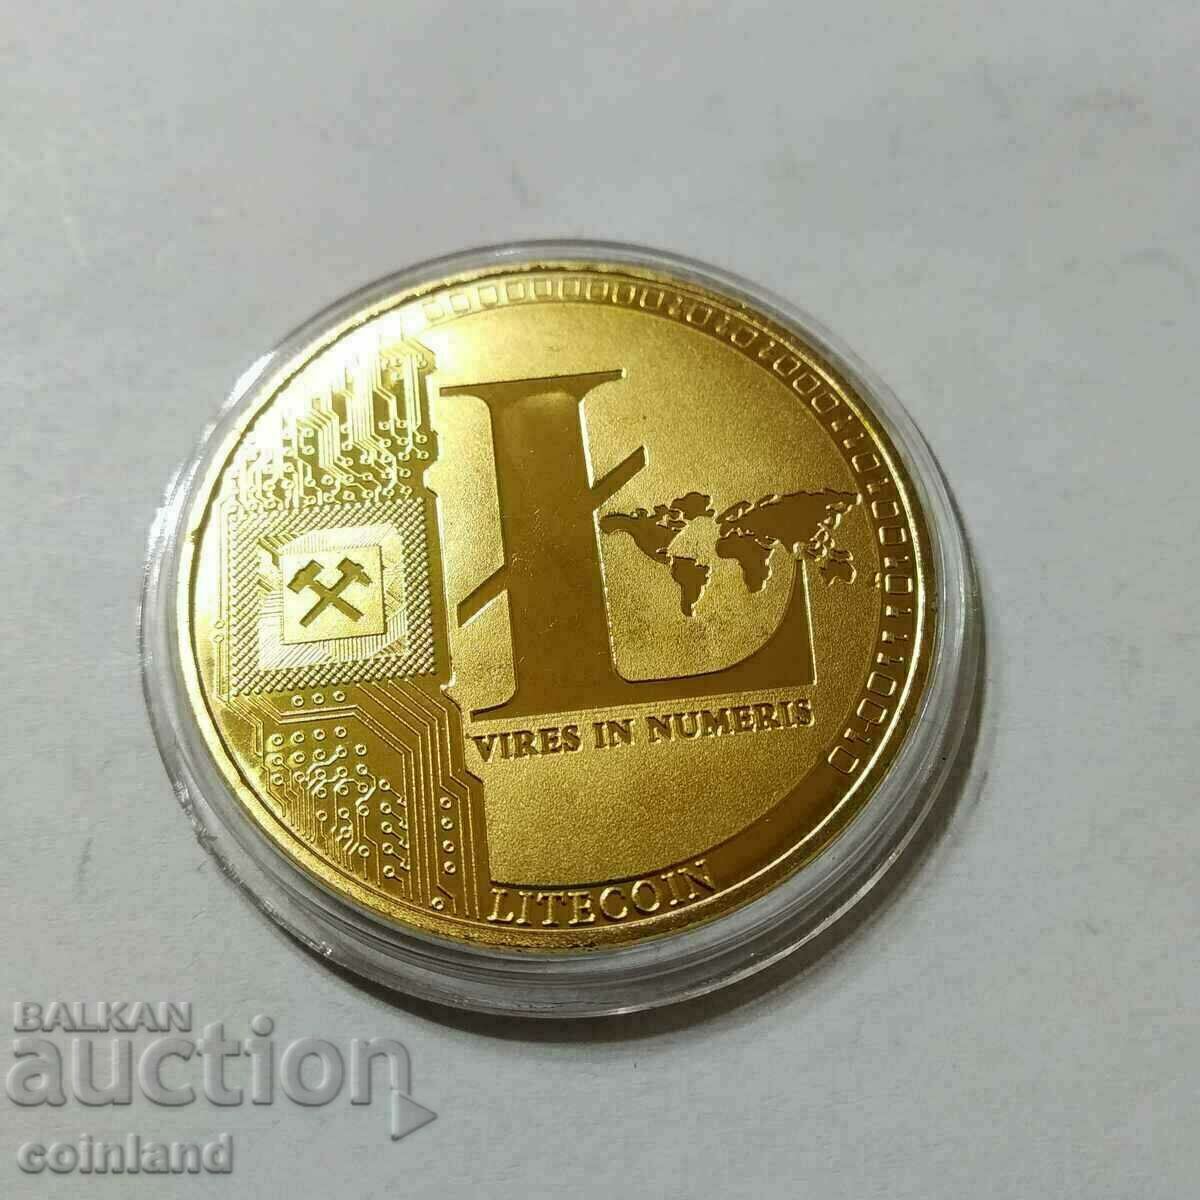 Gold-plated litcoin coin - REPLICA